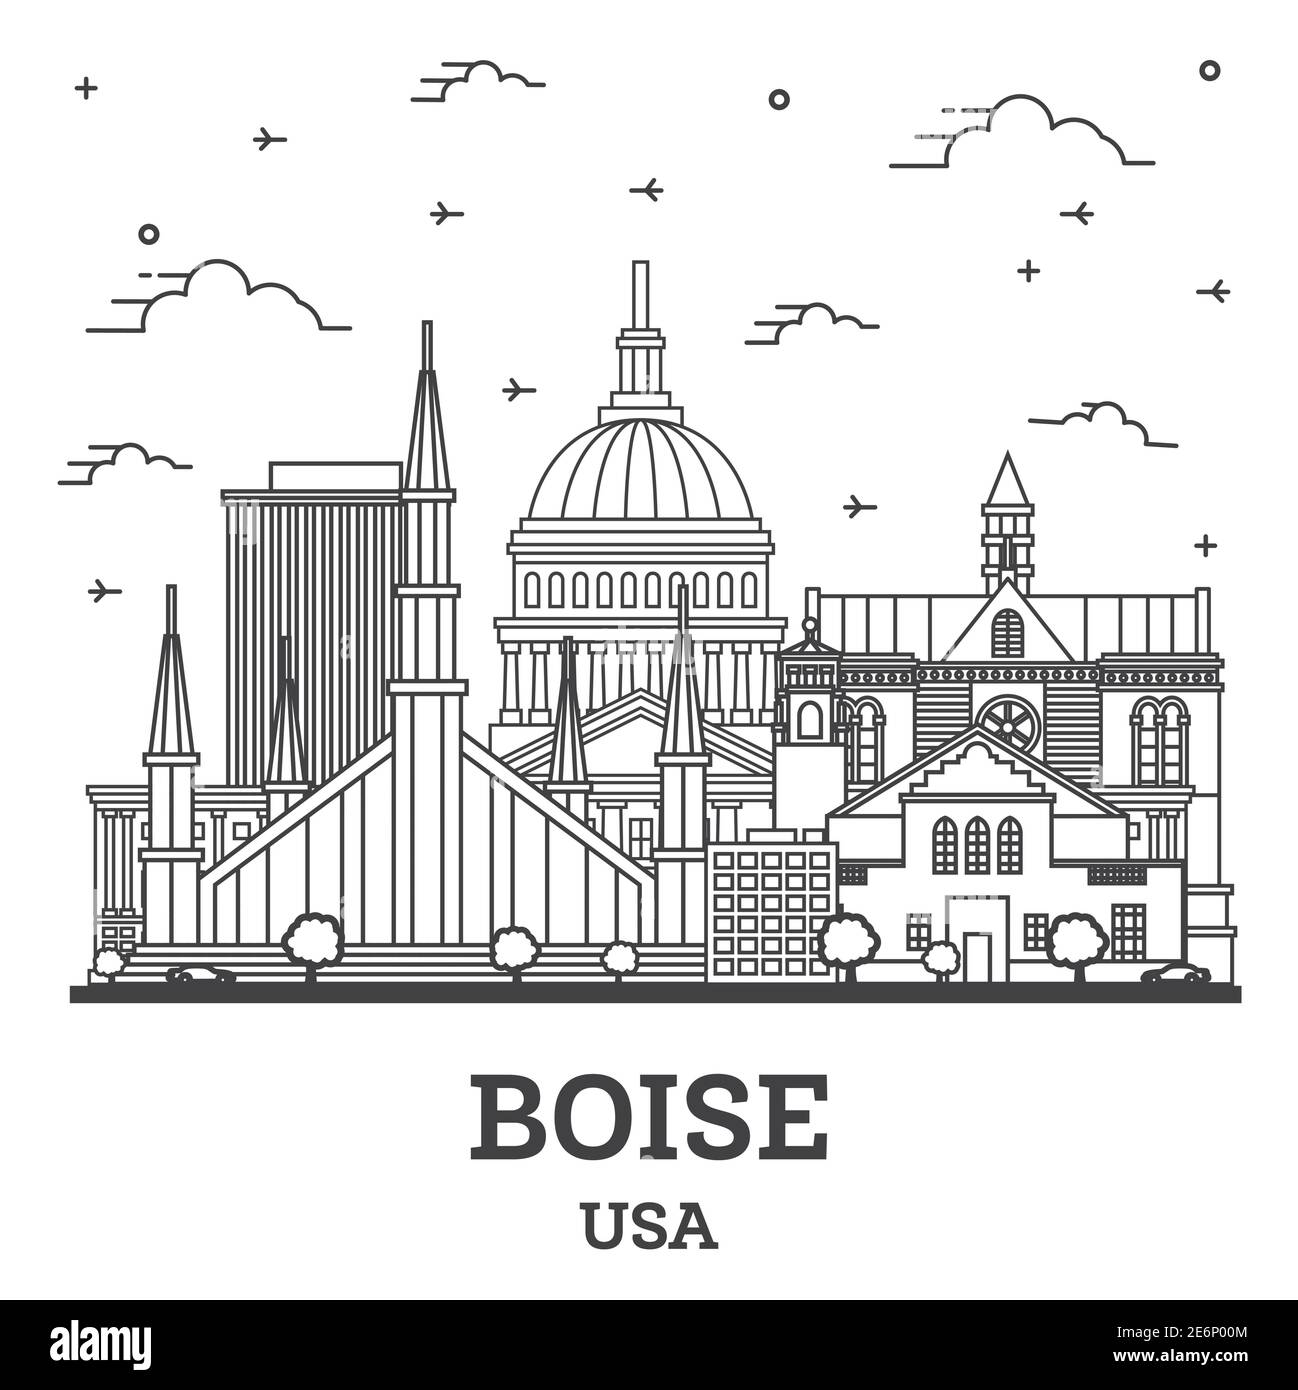 Outline Boise Idaho City Skyline with Modern Buildings Isolated on White. Vector Illustration. Boise USA Cityscape with Landmarks. Stock Vector